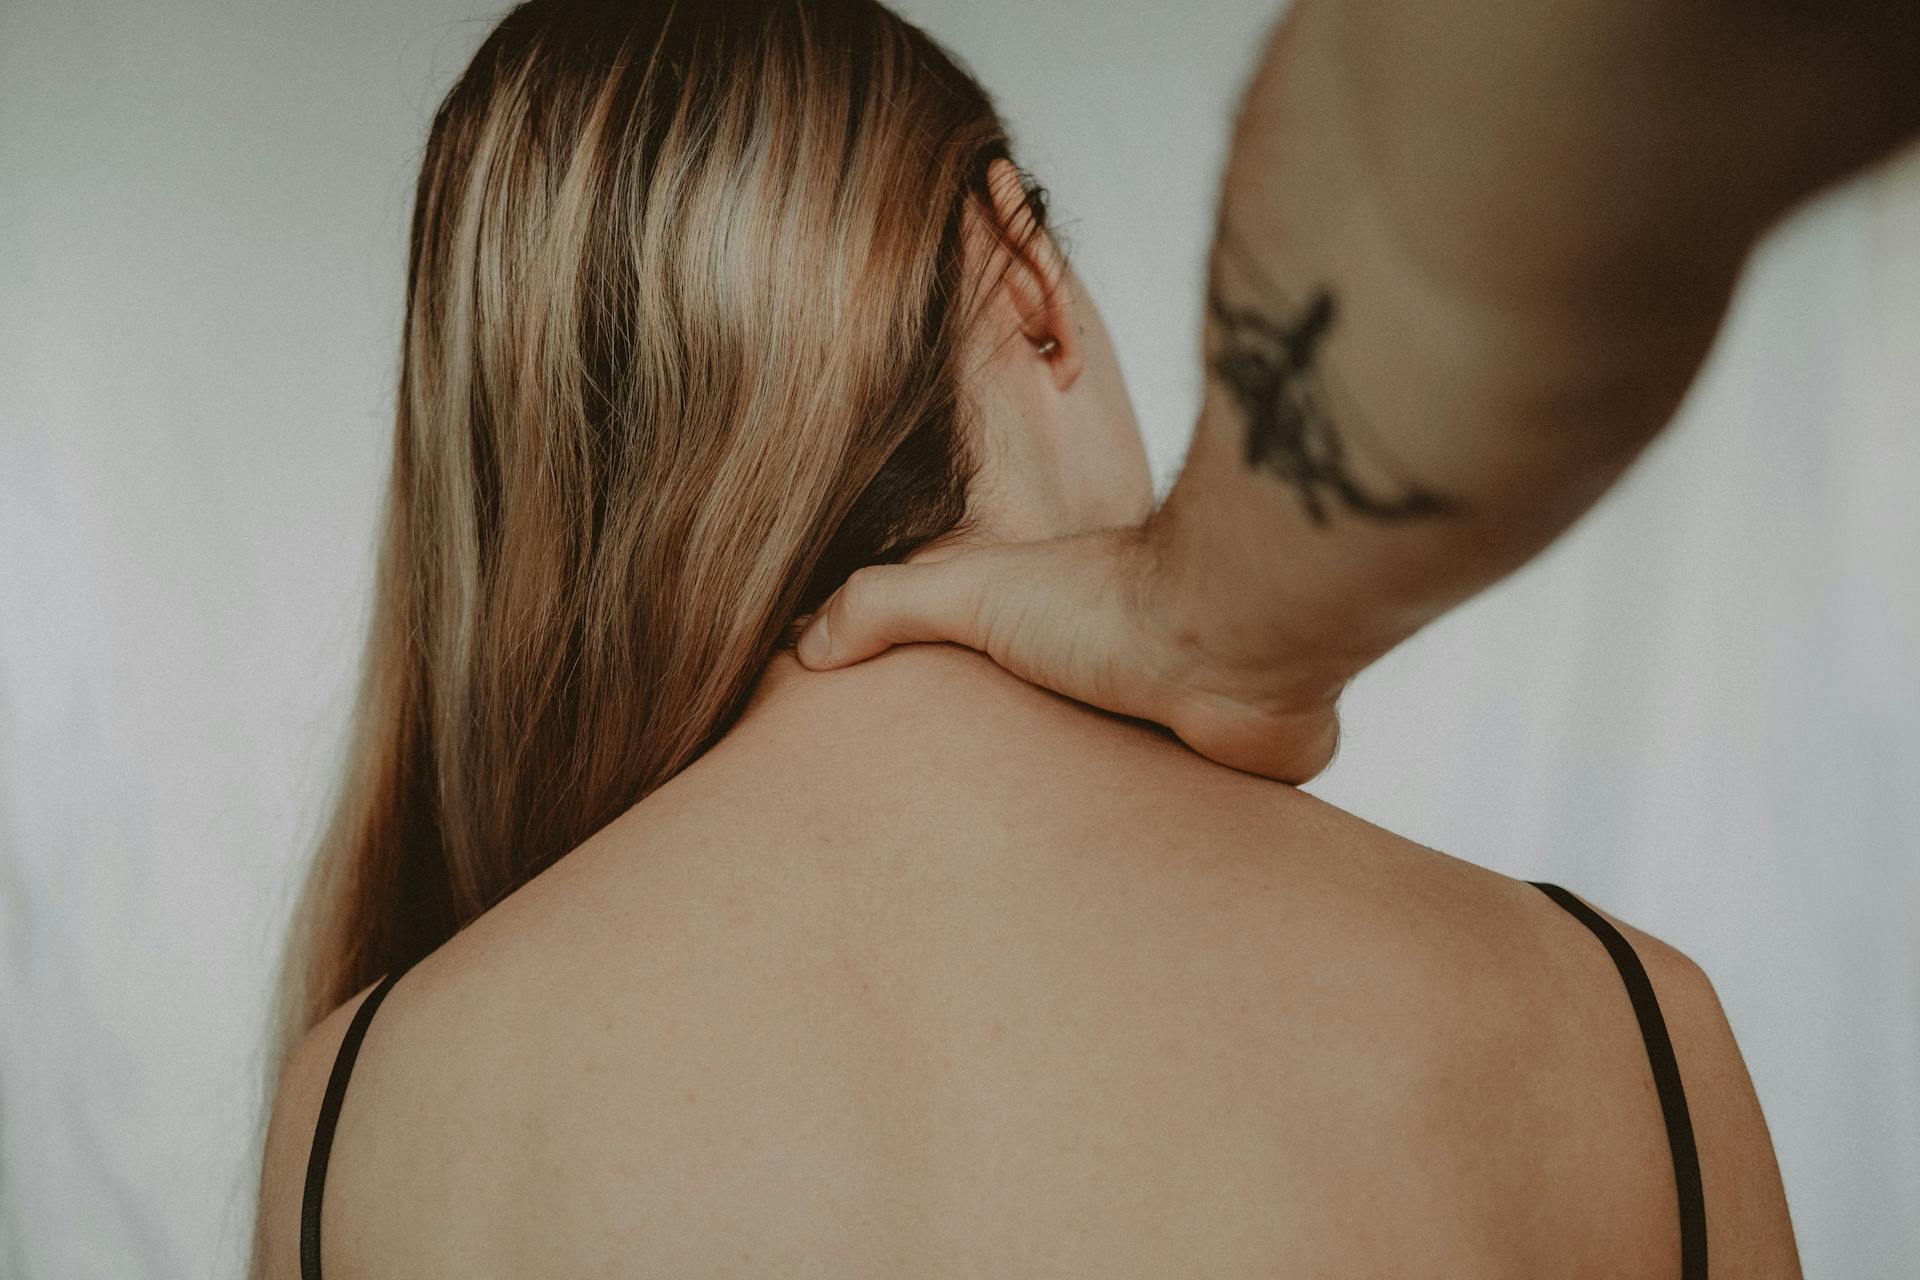 A man giving a woman a massage | Source: Pexels